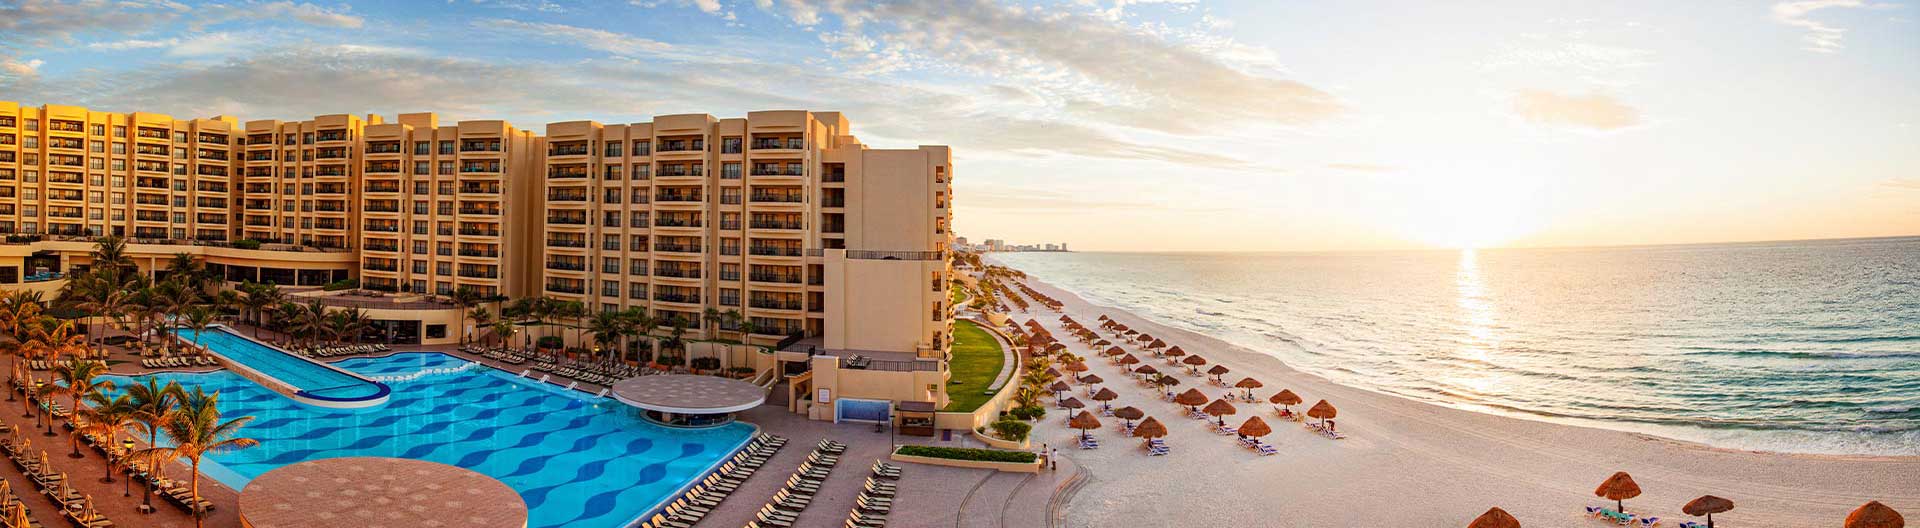 5-star hotels in Riviera Maya